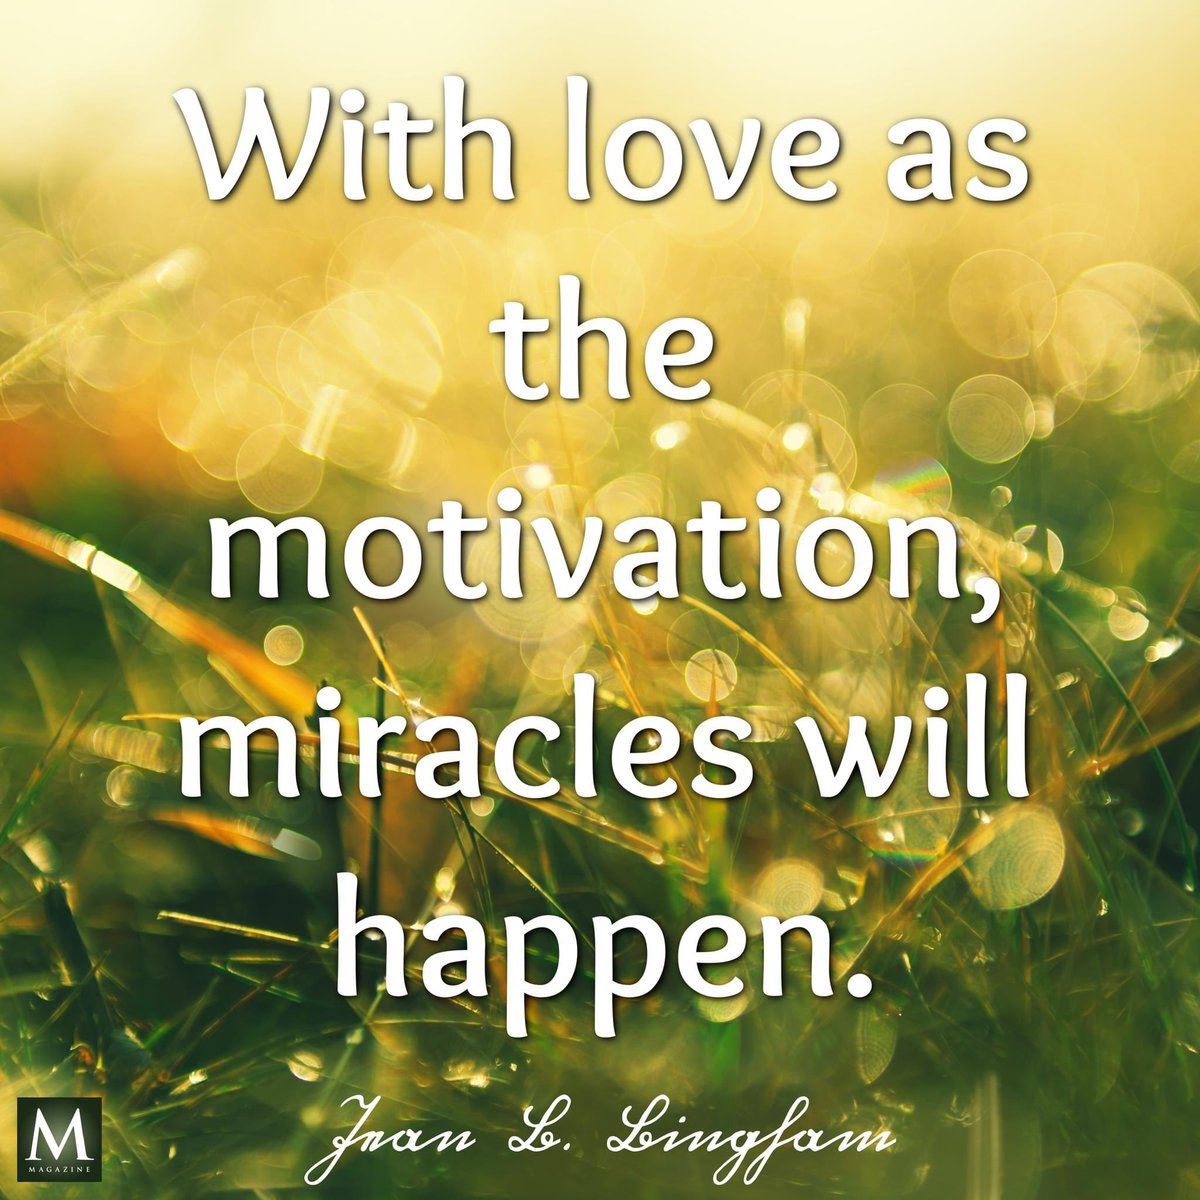 “With love as the motivation, miracles will happen.” ~ Sister Jean B. Bingham

#HearHim #TrustGod #GodLovesYou #ComeUntoChrist #CountOnHim #EmbraceHim #ChildOfGod #ShareGoodness #TheChurchOfJesusChristOfLatterDaySaints